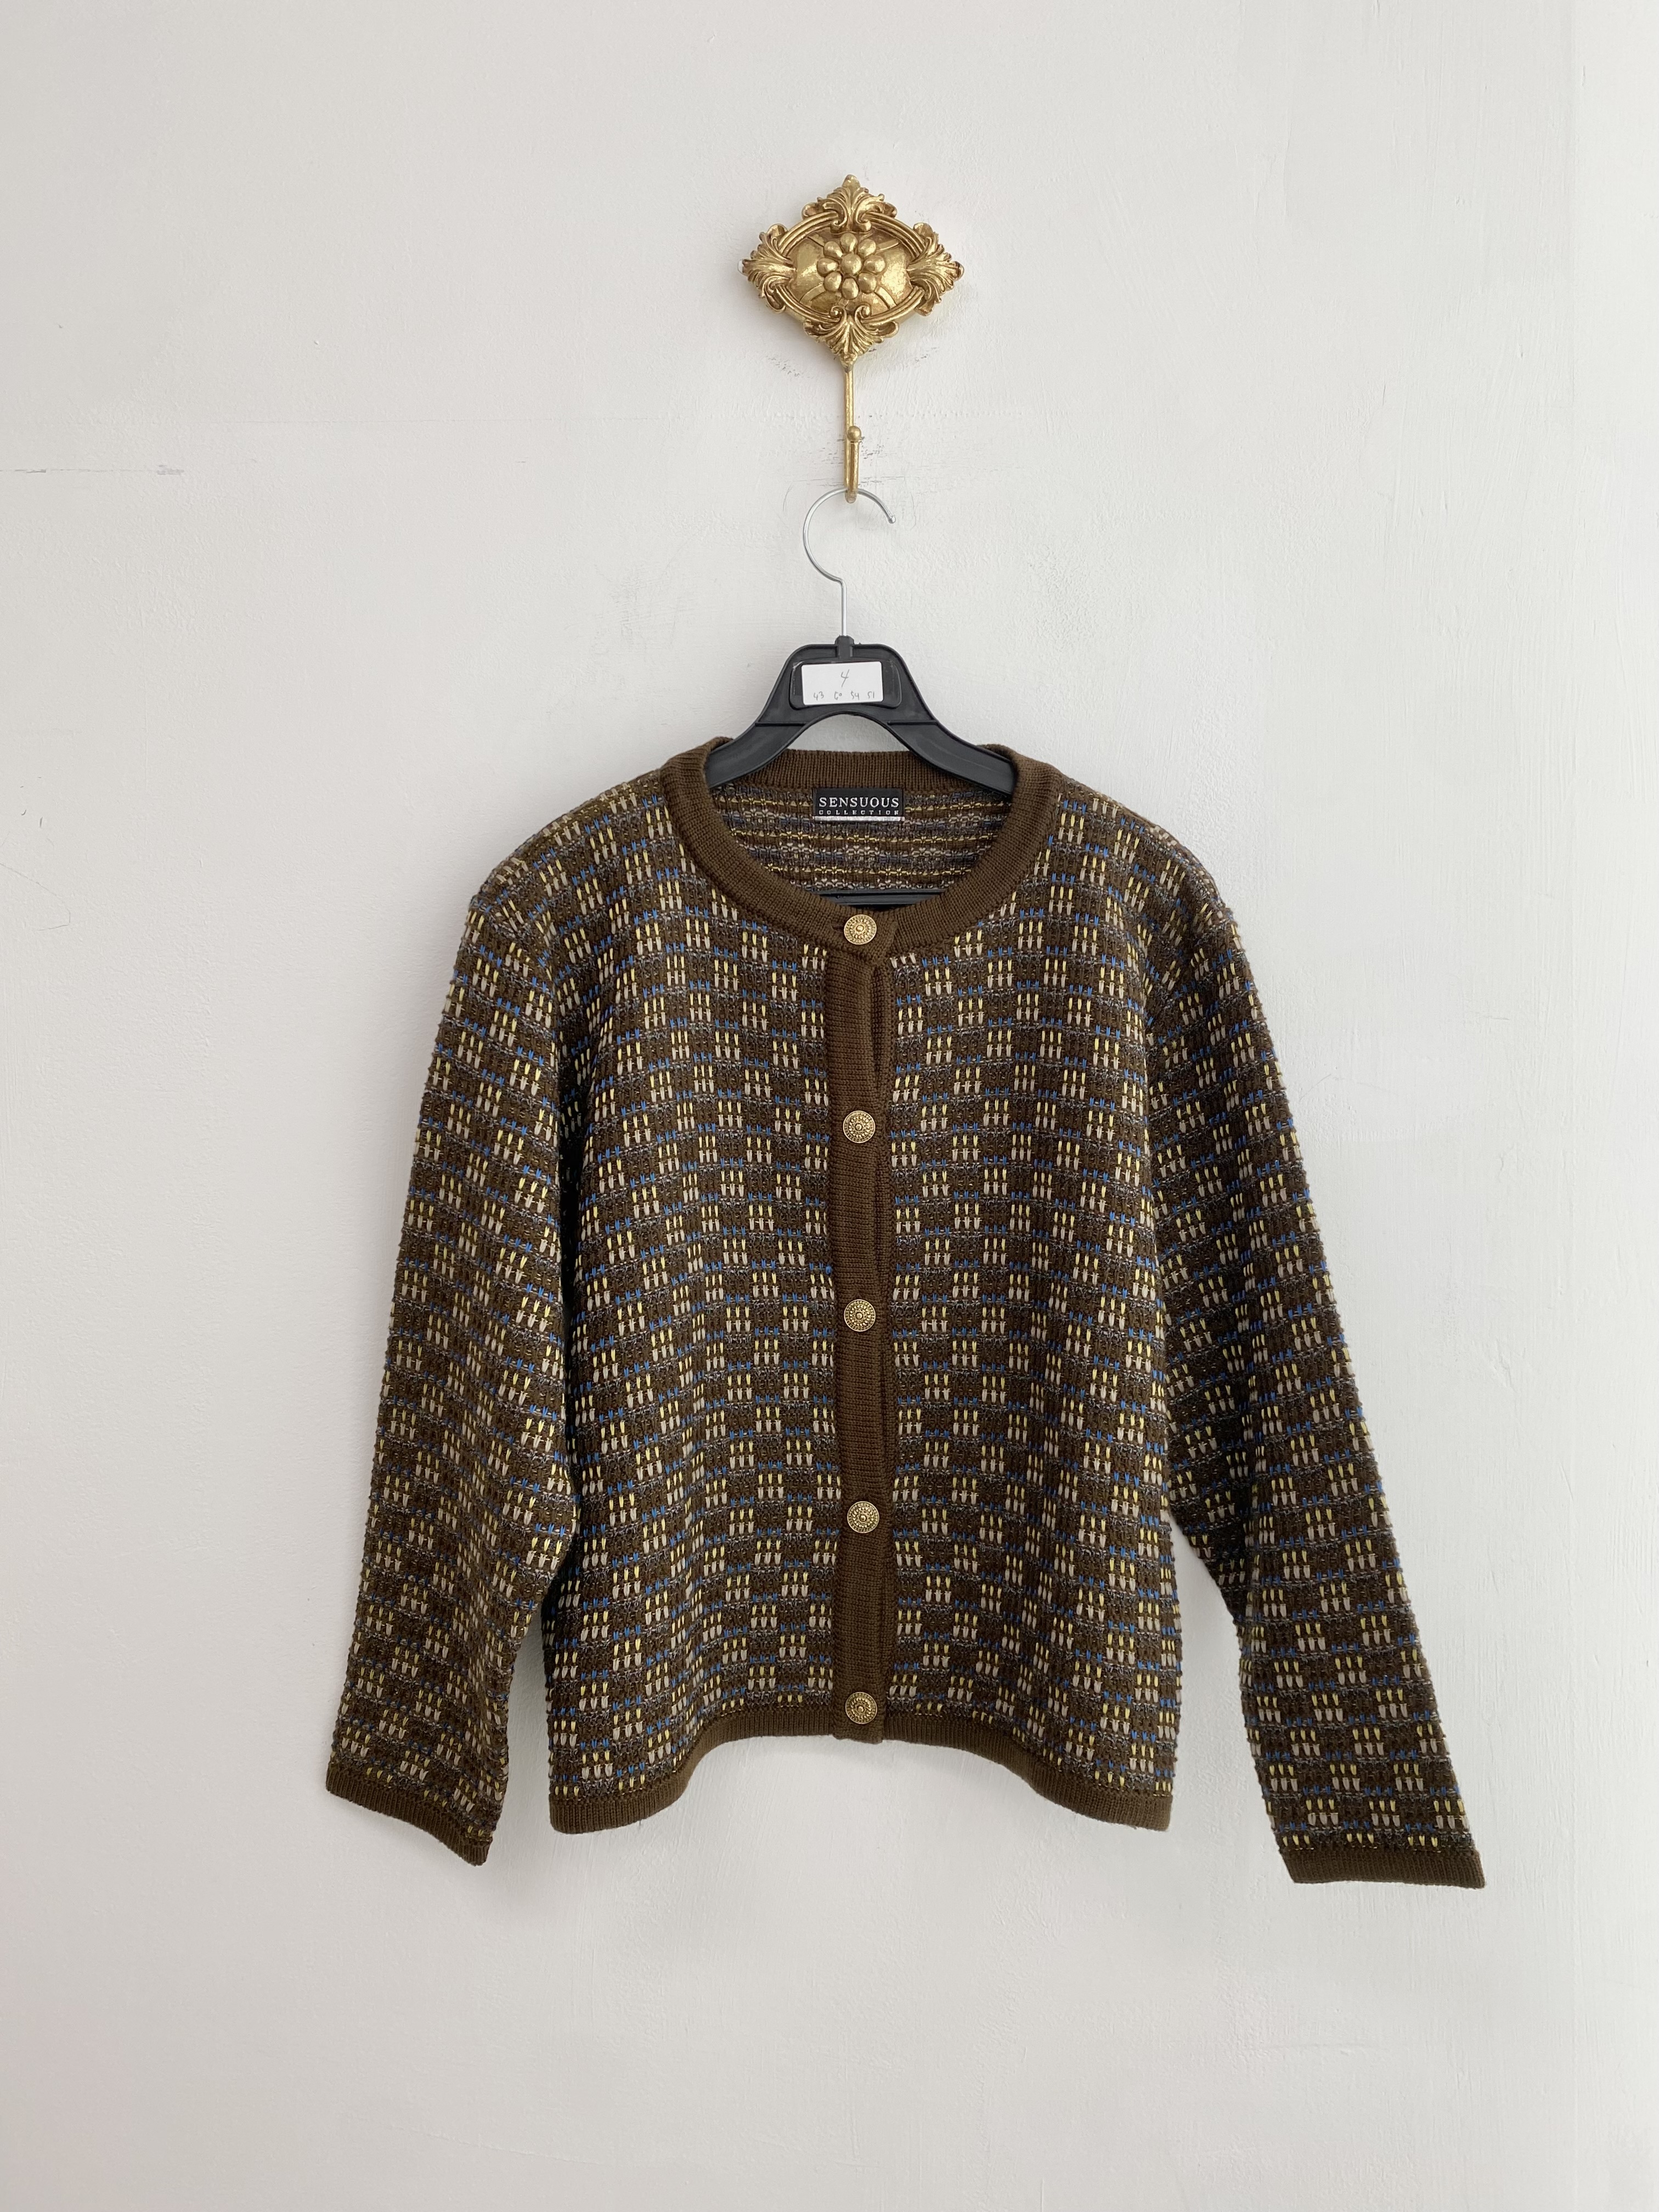 Brown colorful pattern knit cardigan jacket